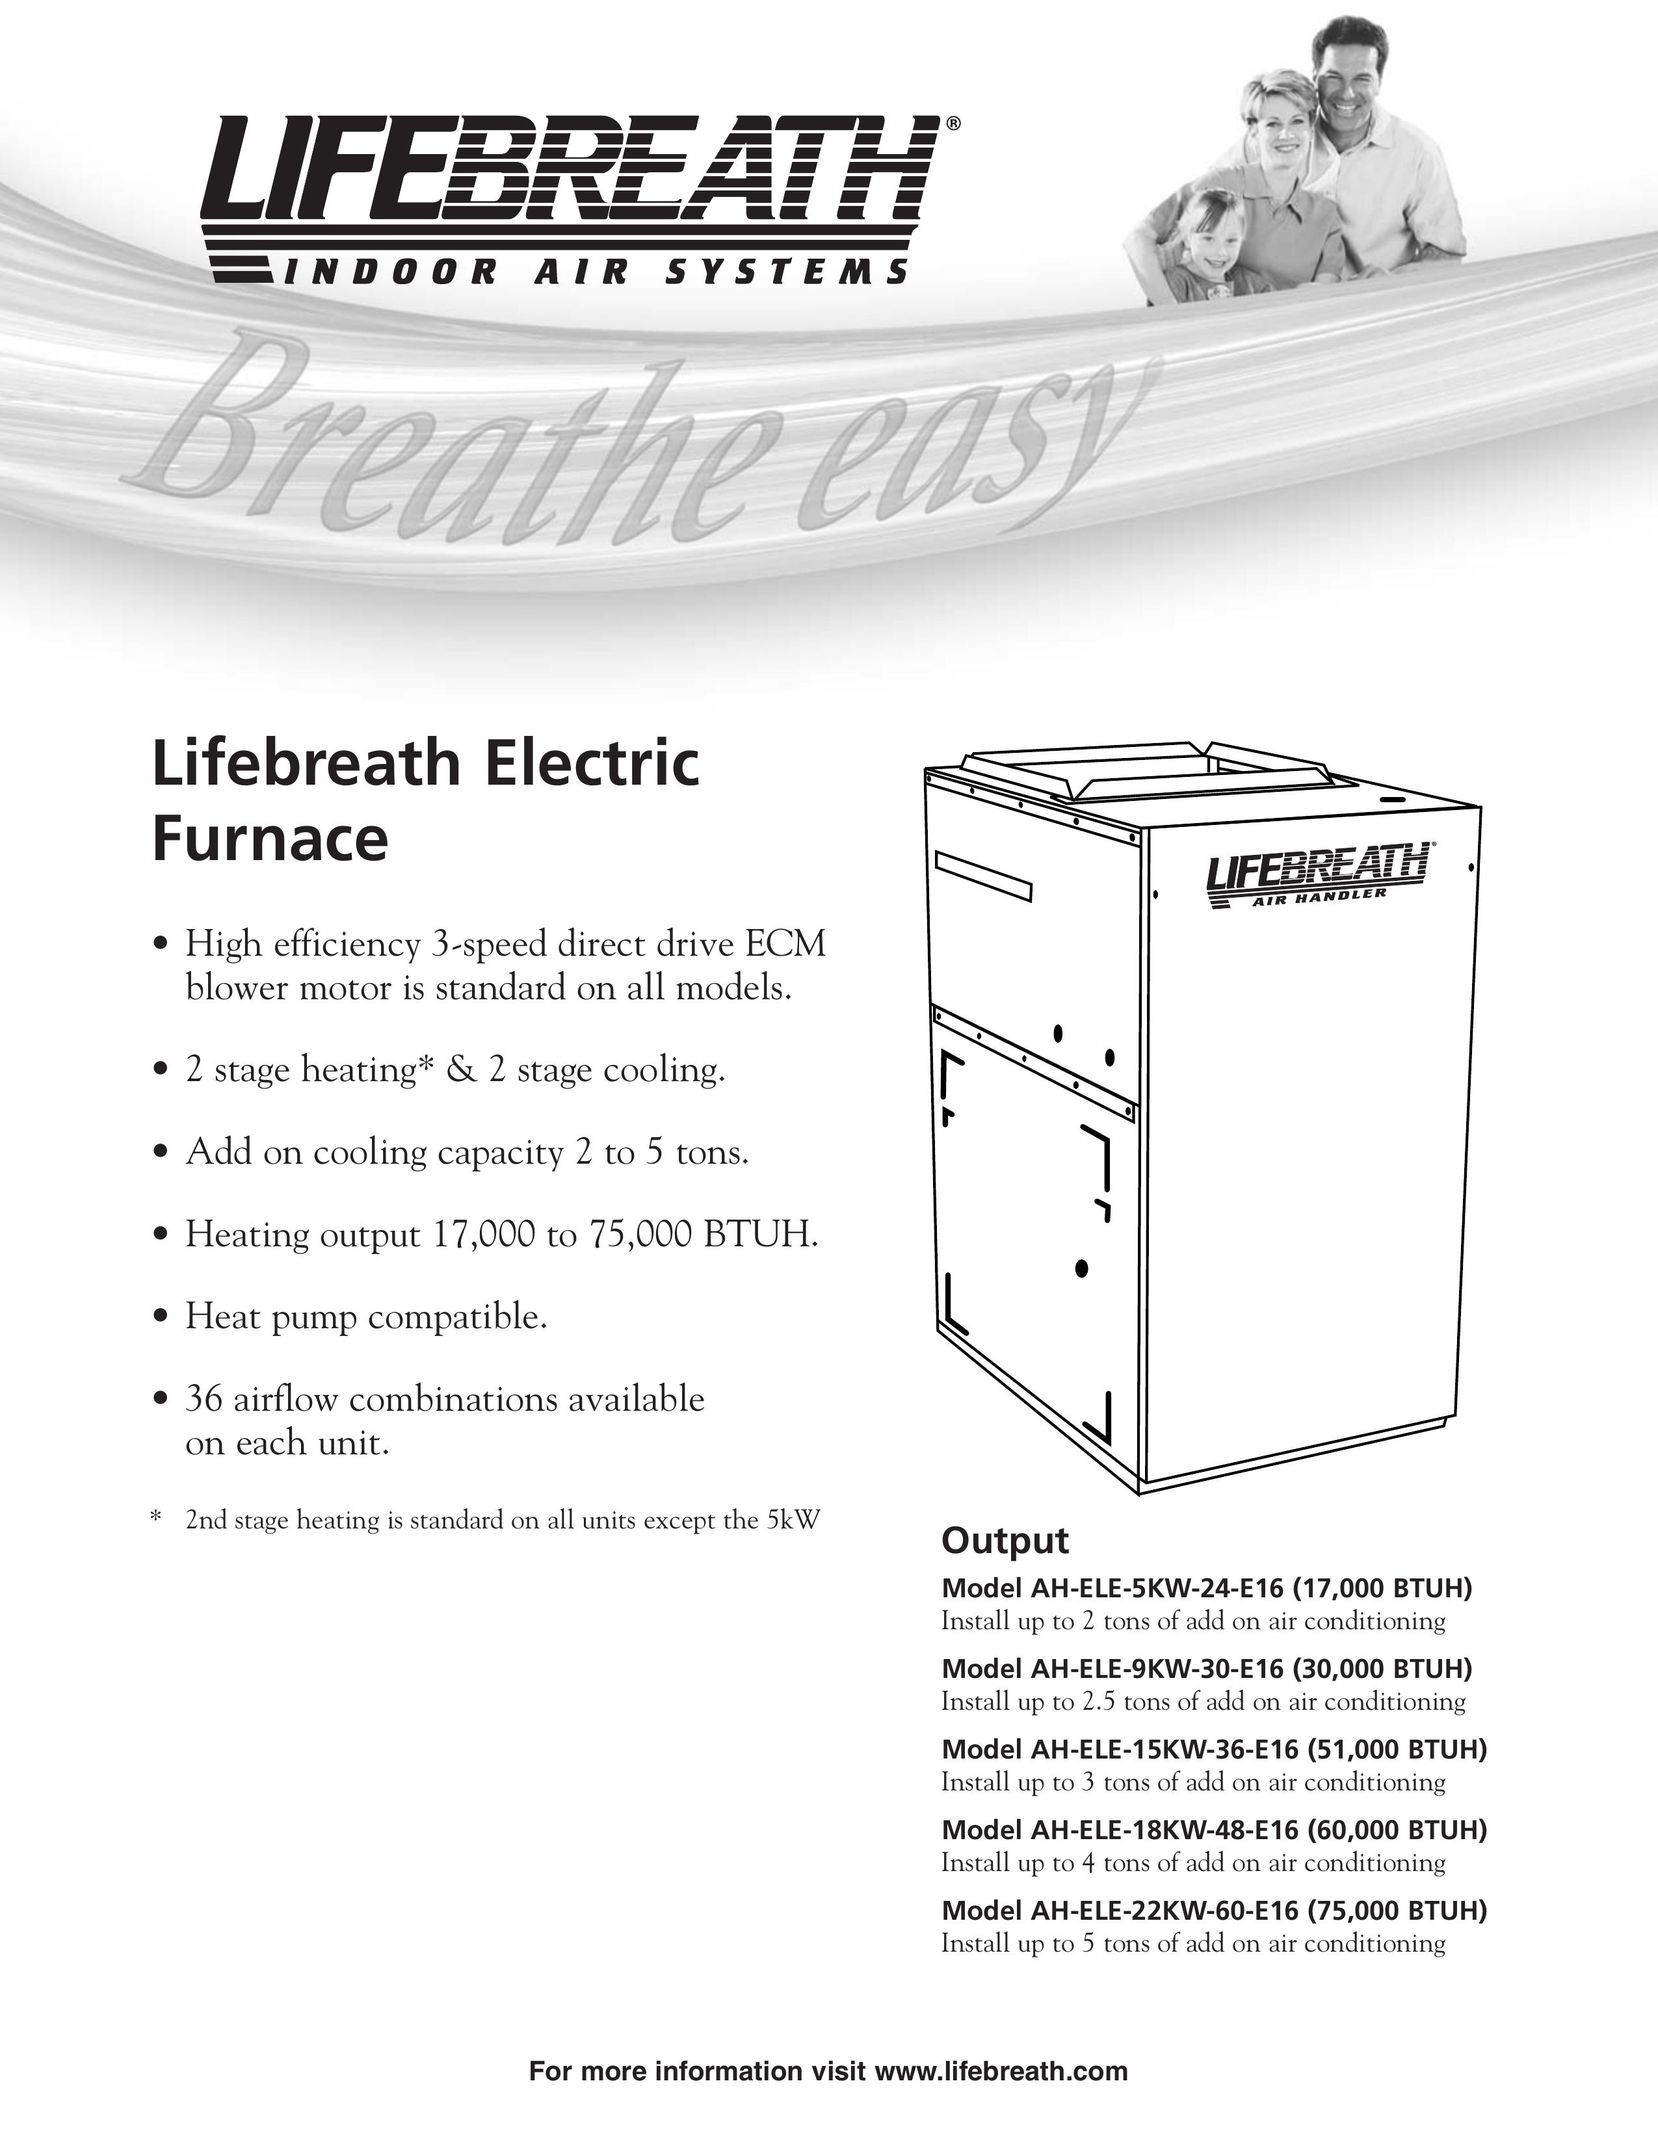 Lifebreath AH-ELE-22KW-60-E16 Thermostat User Manual